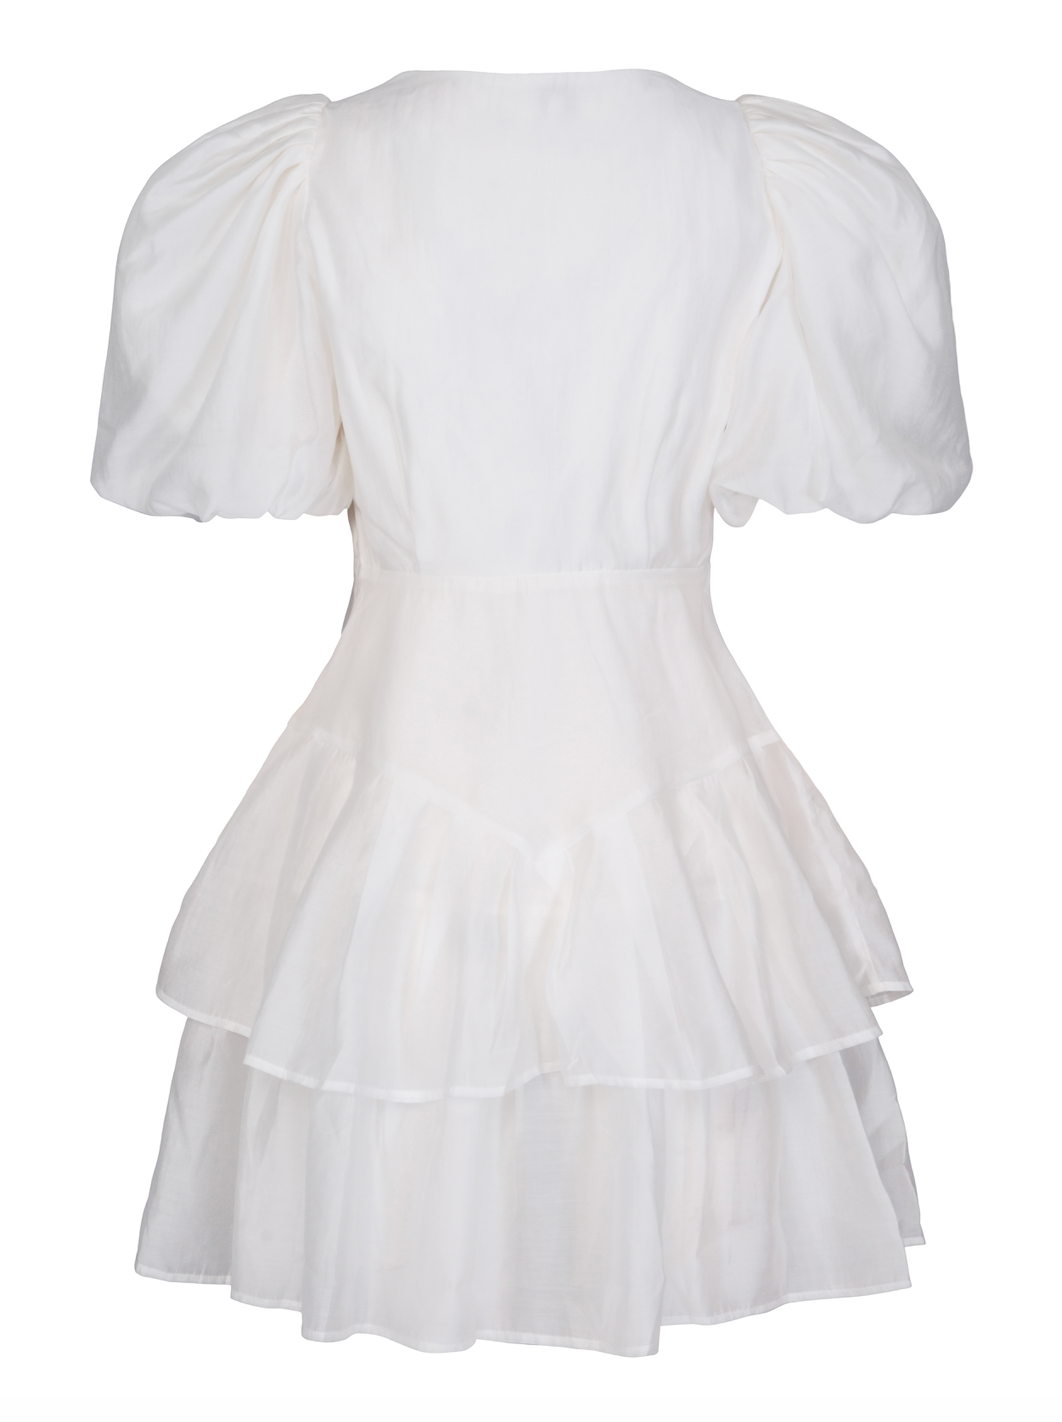 Sailor Dress - White